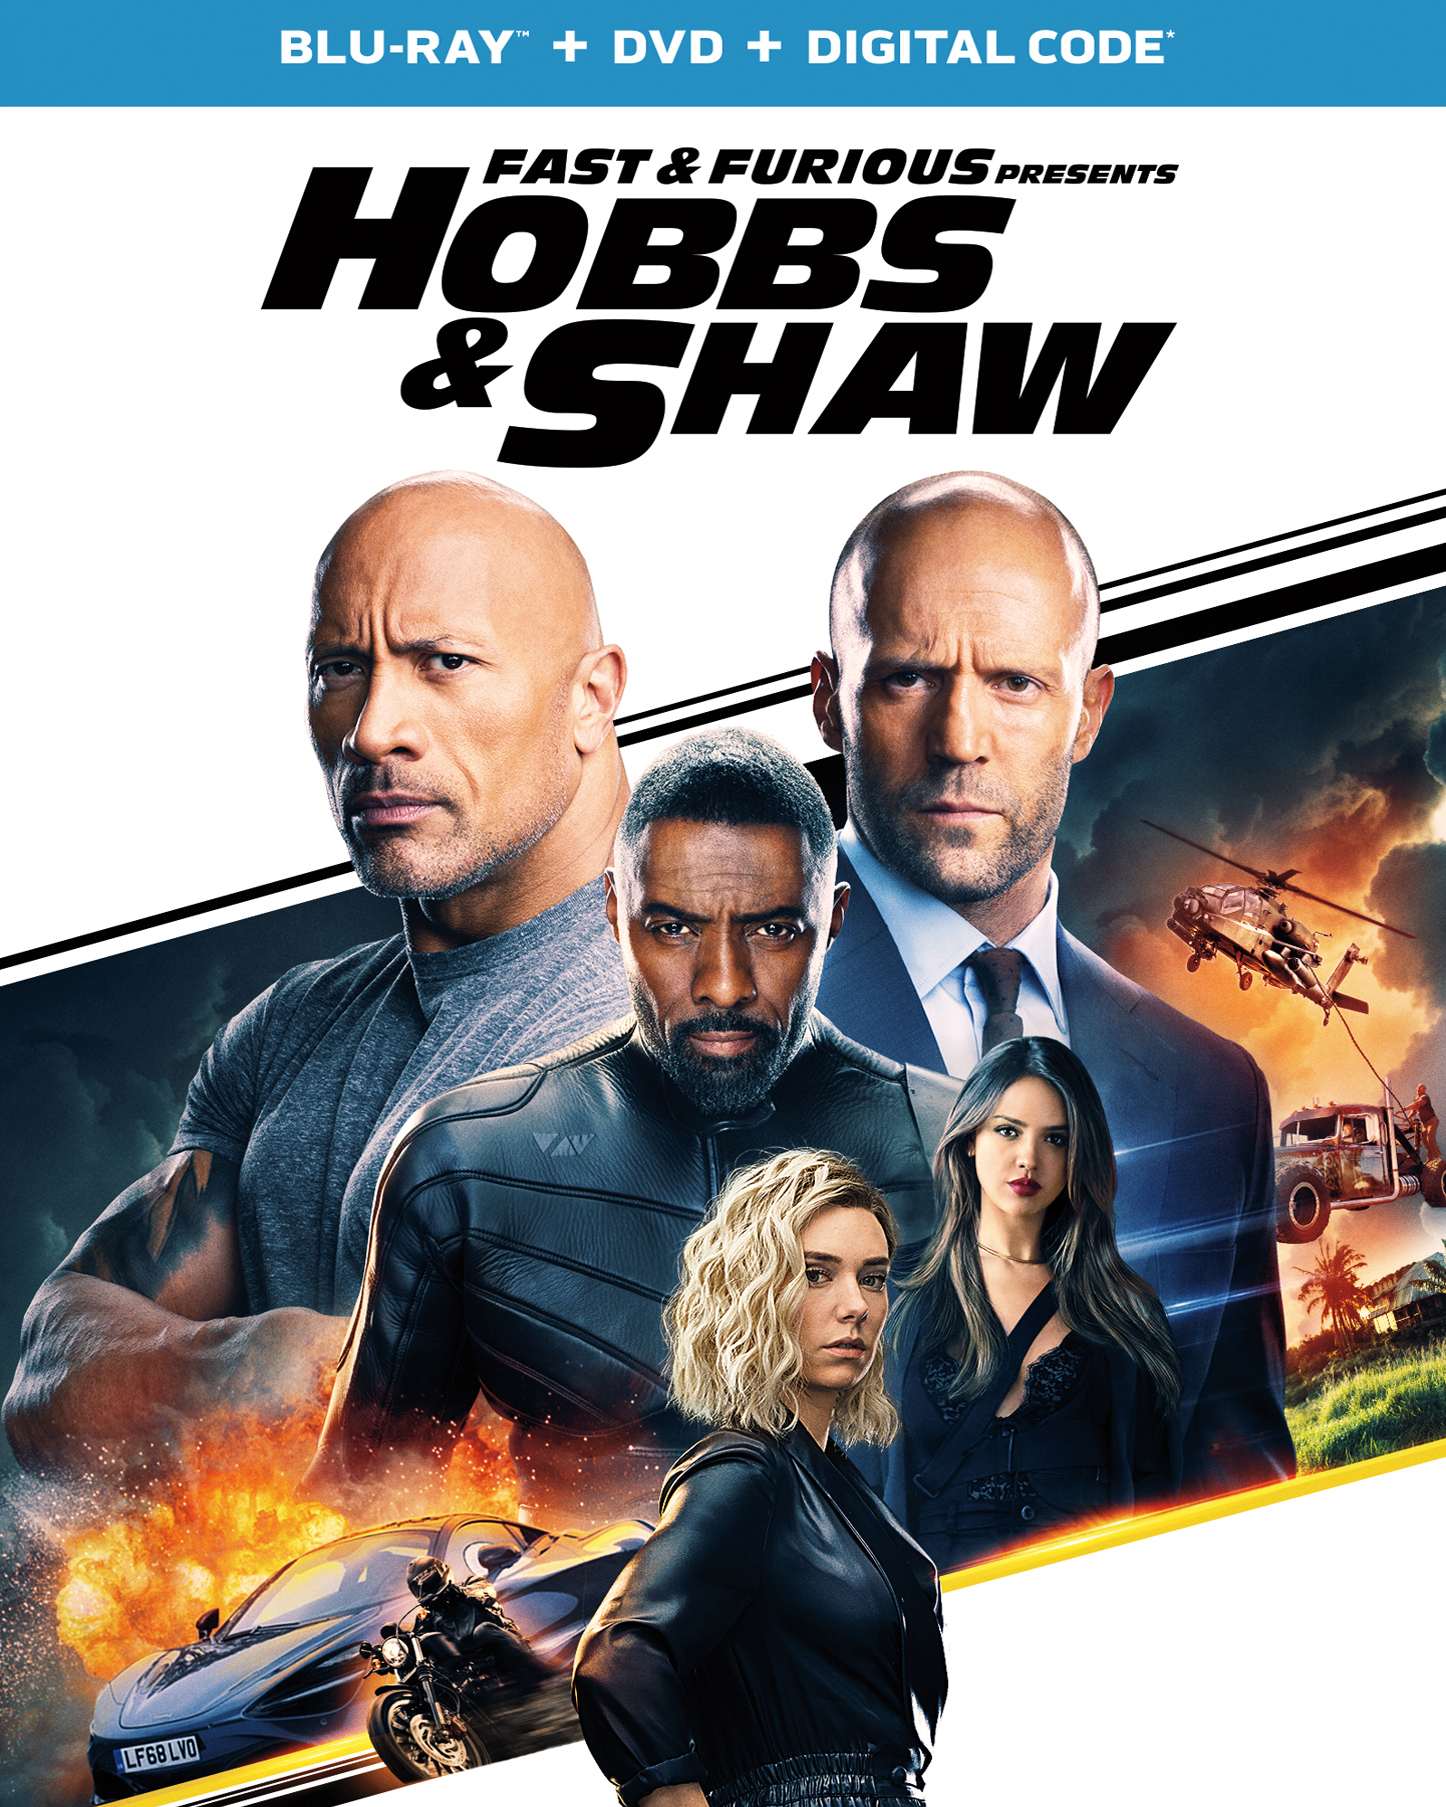 Fast & Furious Presents: Hobbs & Shaw [Includes Digital Copy] [Blu-ray/DVD] [2019]